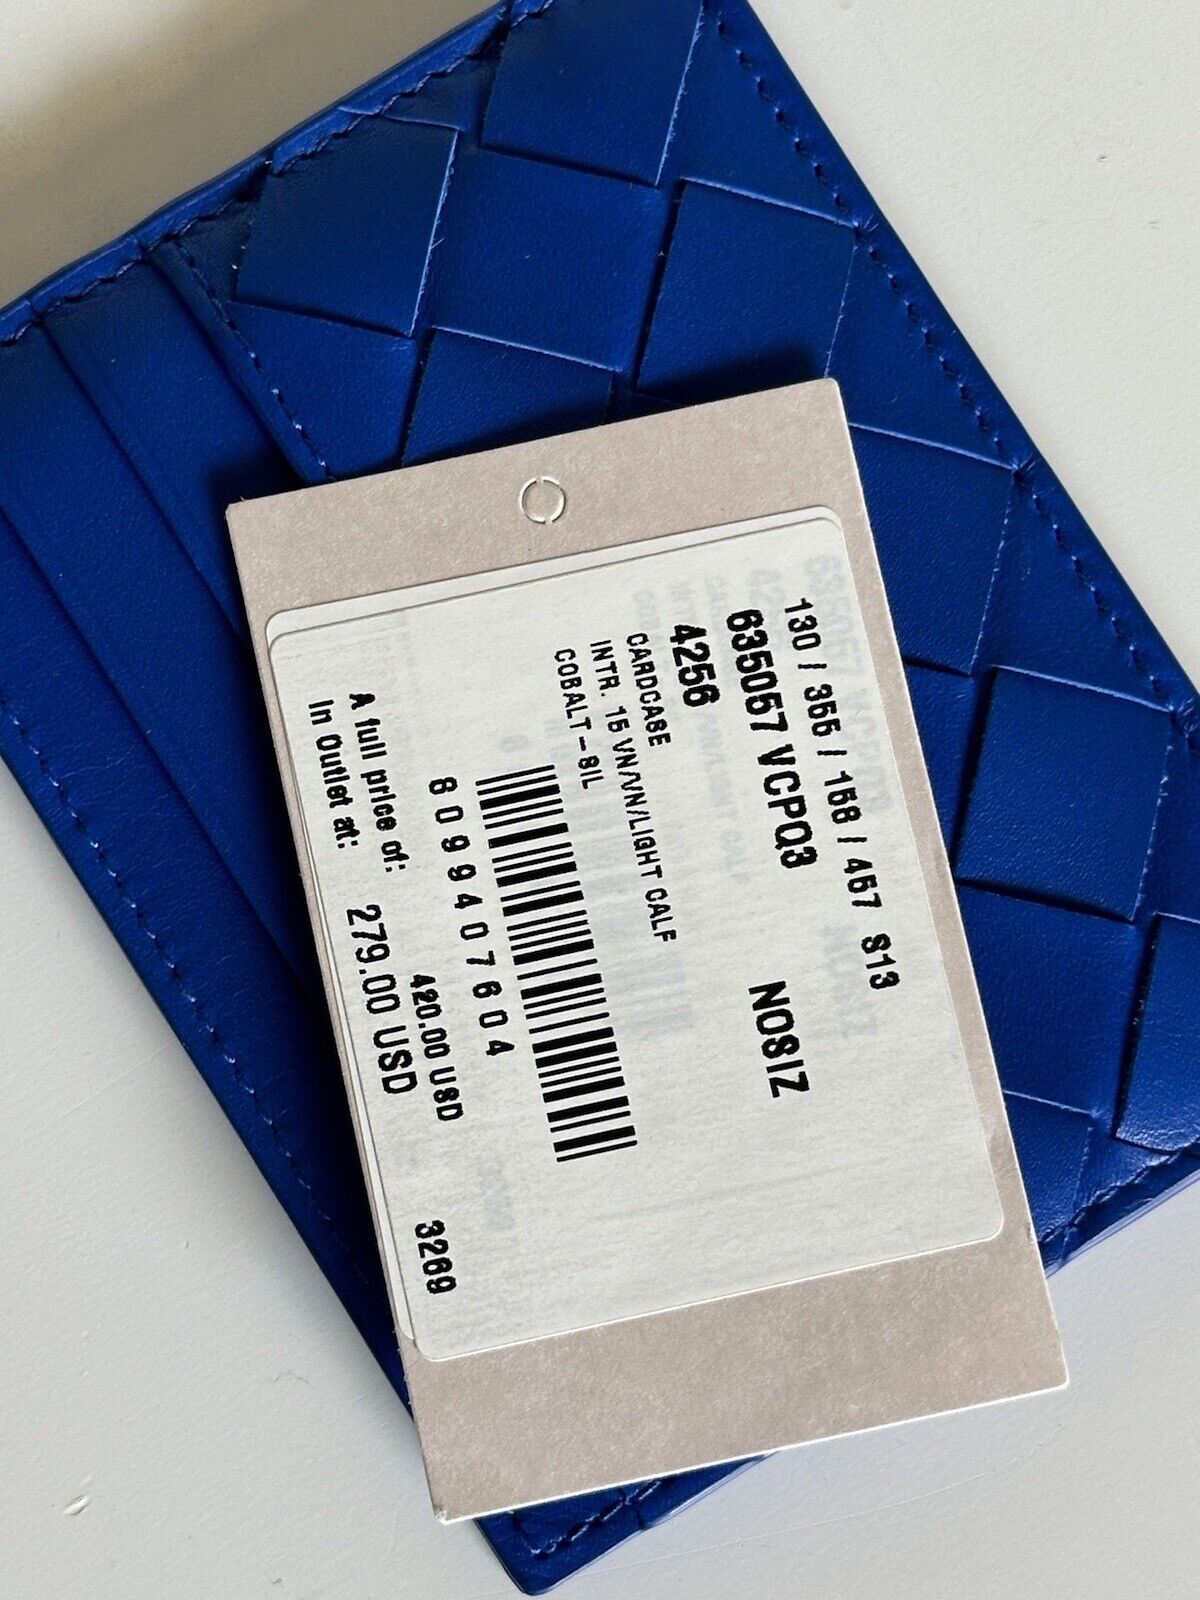 NWT $420 Bottega Veneta Men's intrecciato Leather Card Case Blue 635057 Italy